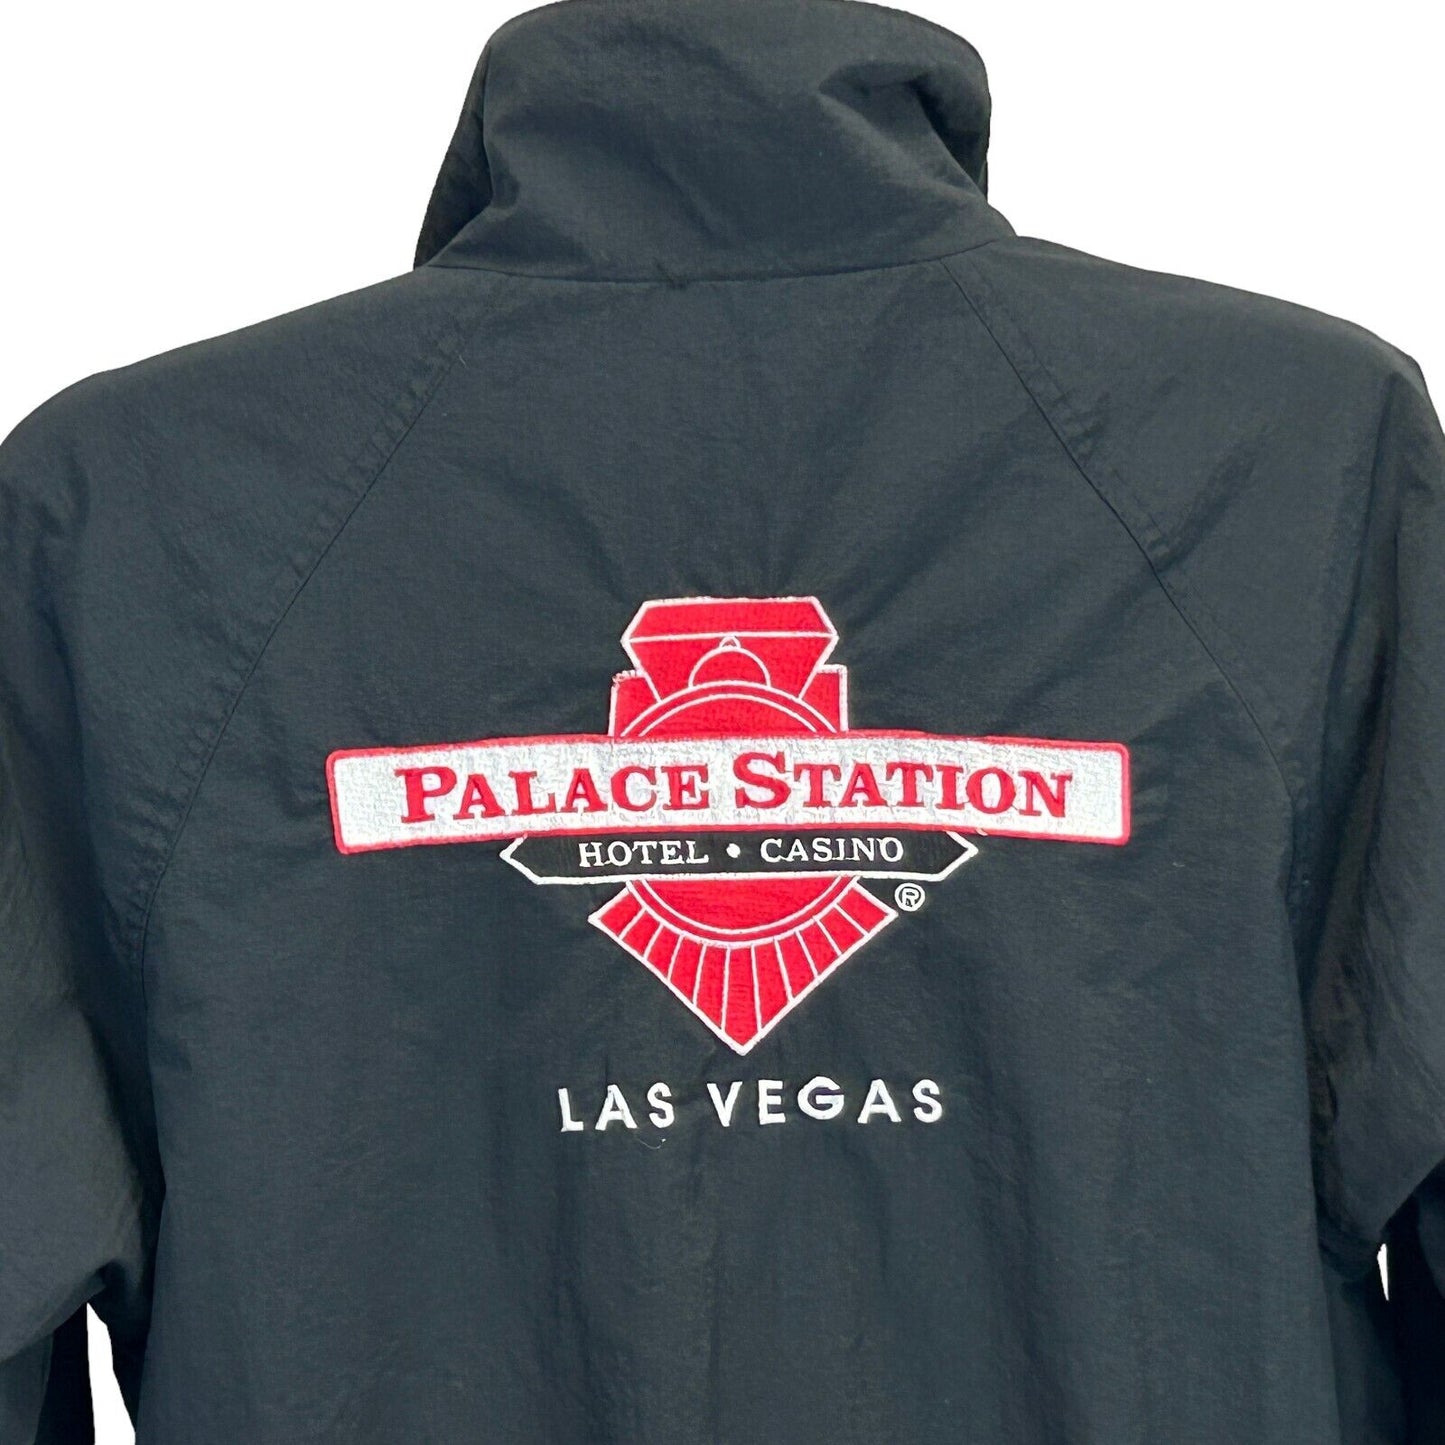 Palace Station Hotel Casino Vintage 90s Jacket Las Vegas Made In USA Medium